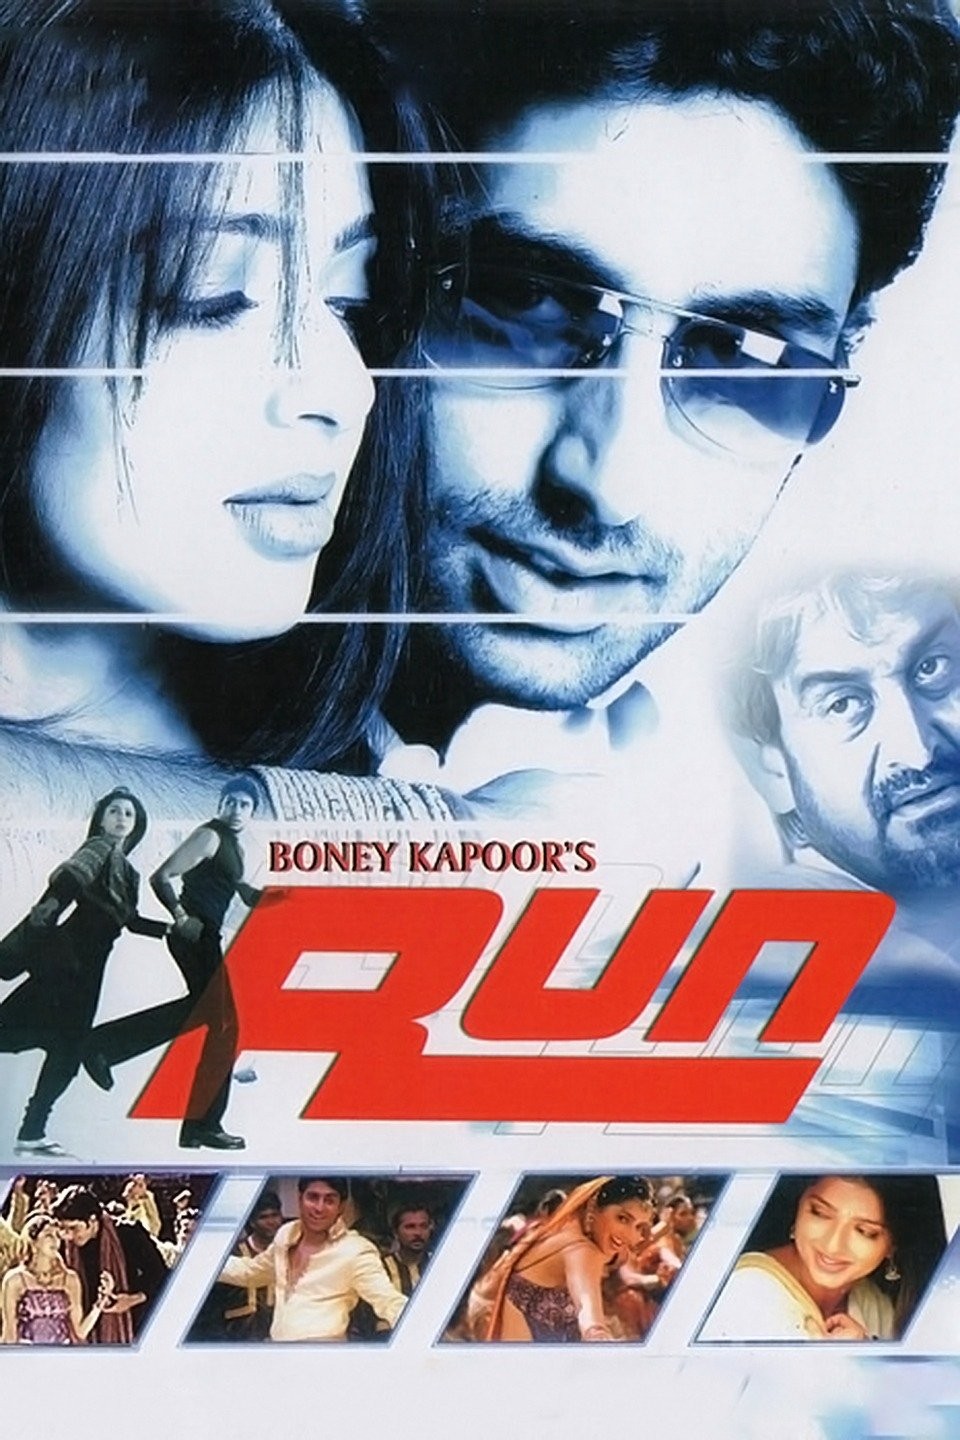 run boy run song in movie